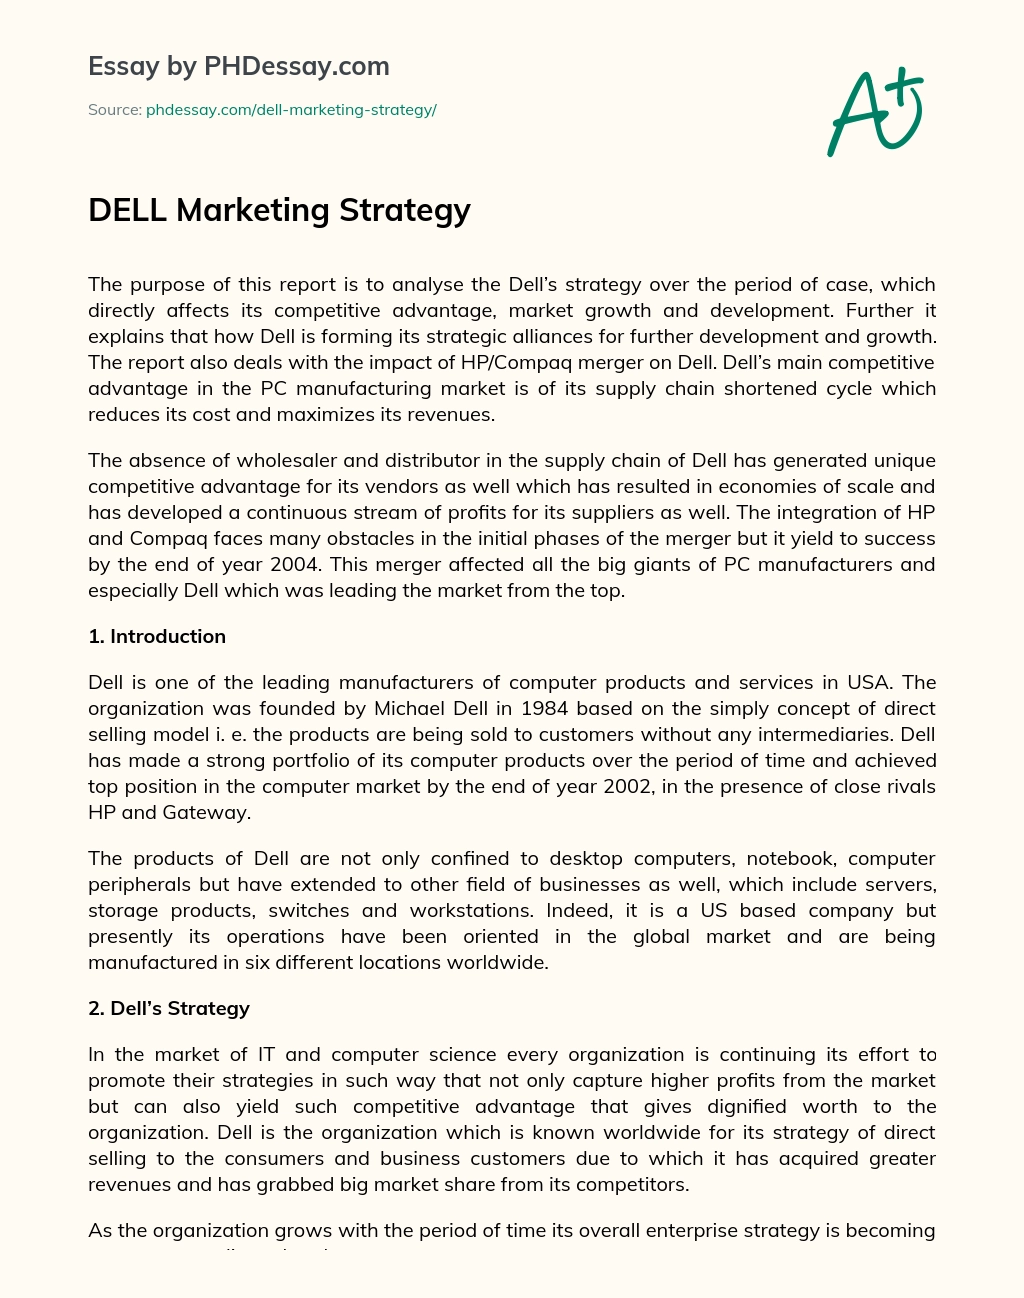 DELL Marketing Strategy essay